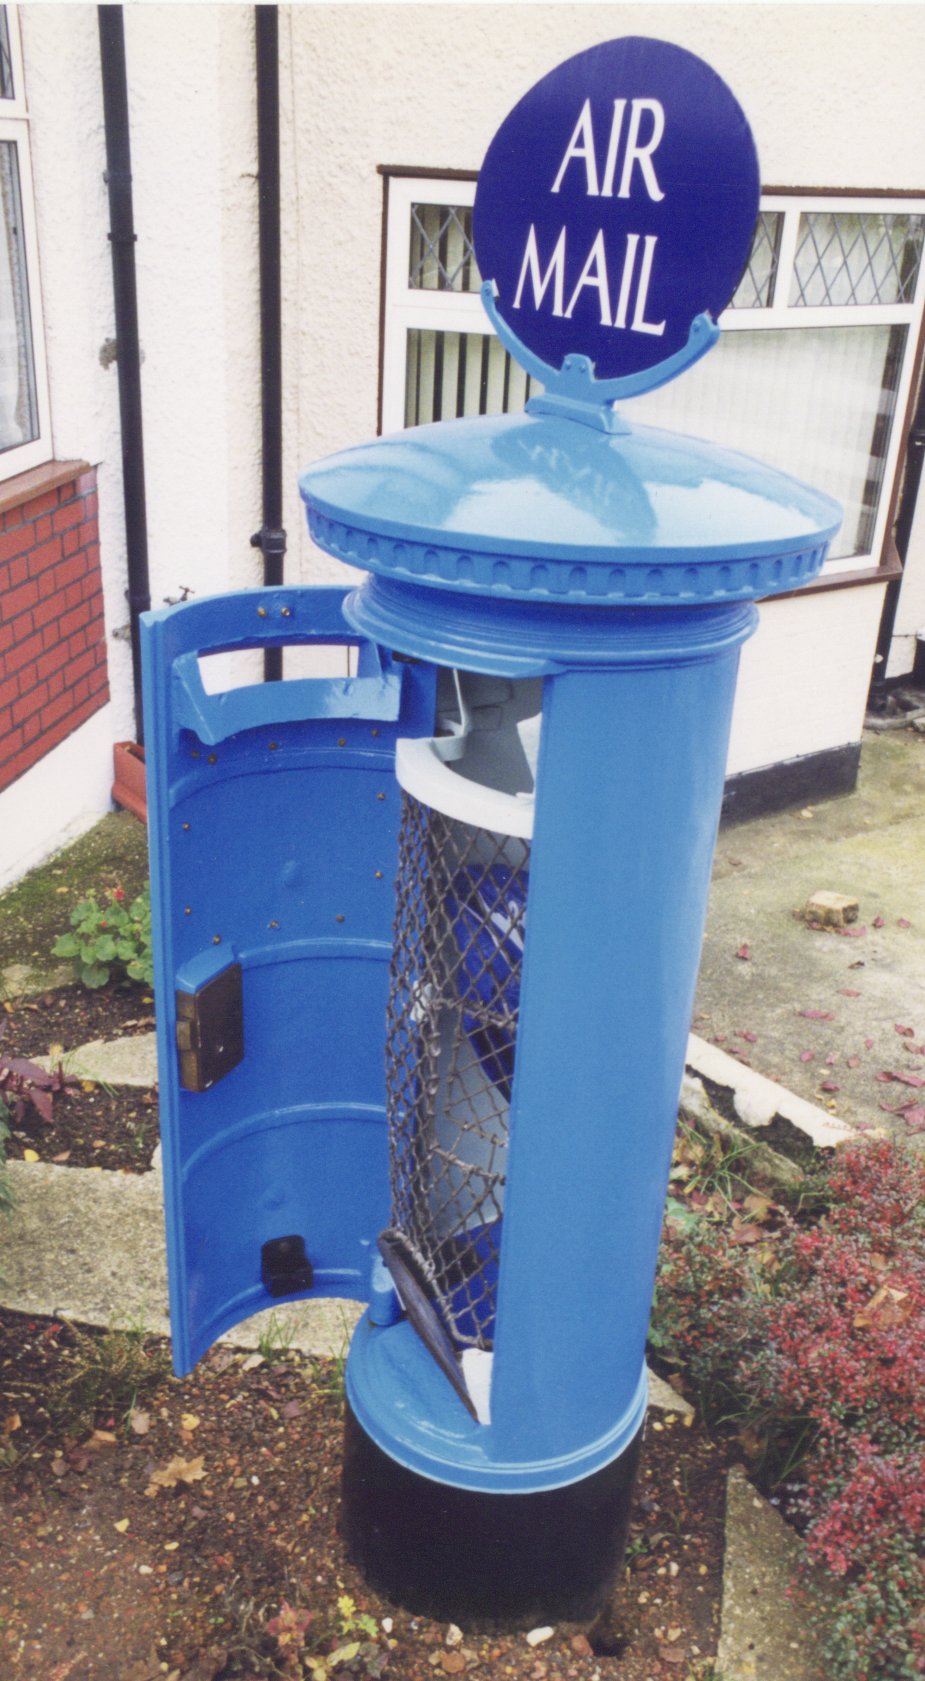 Air Mail pillar box in original blue colors at South Harrow. Photo taken on July 1, 1999.